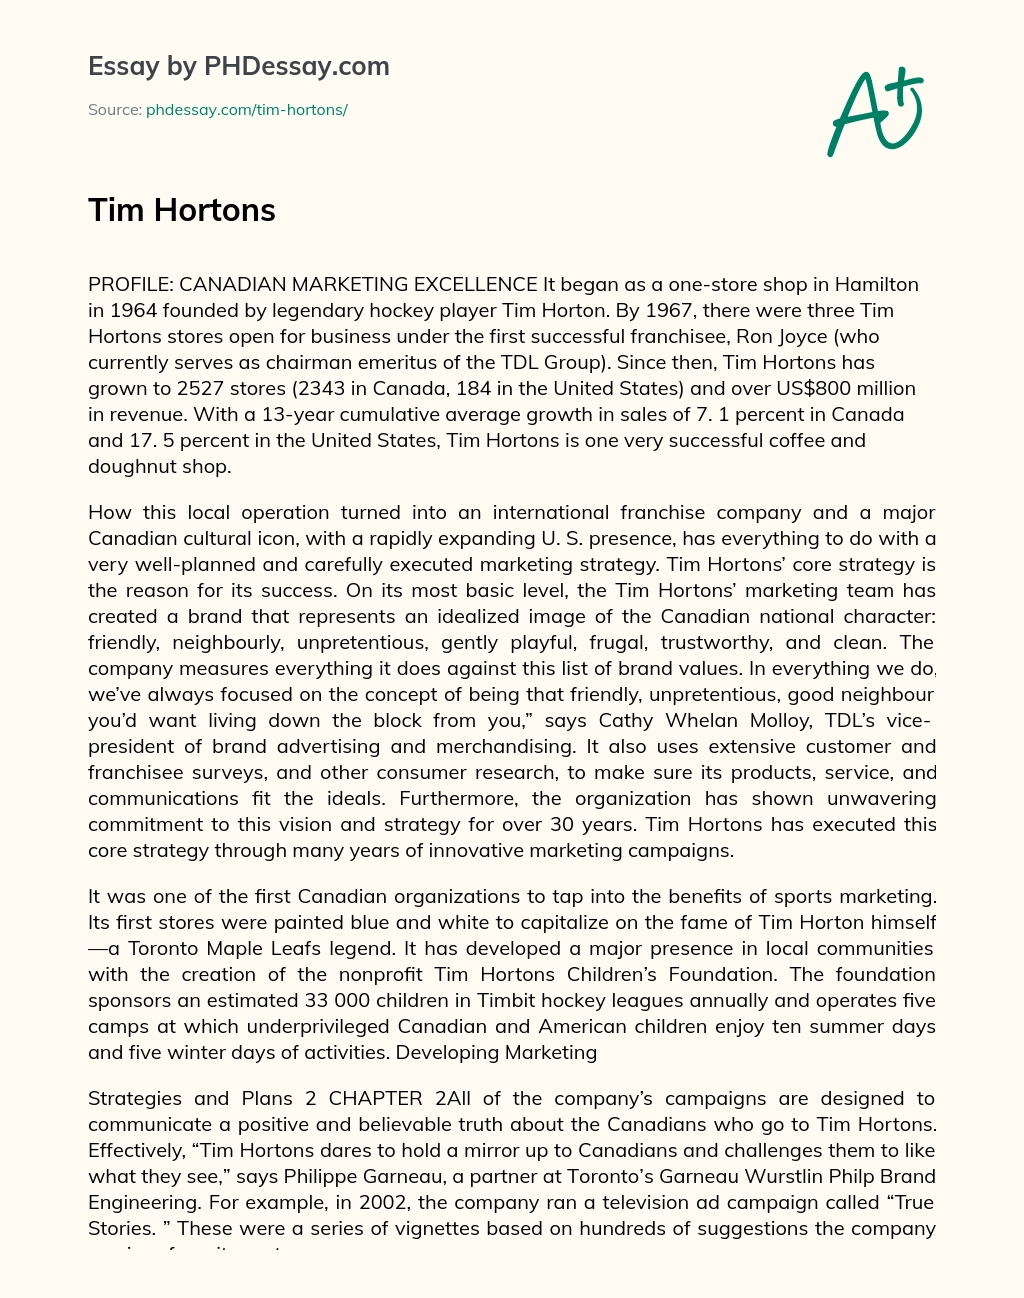 Tim Hortons essay